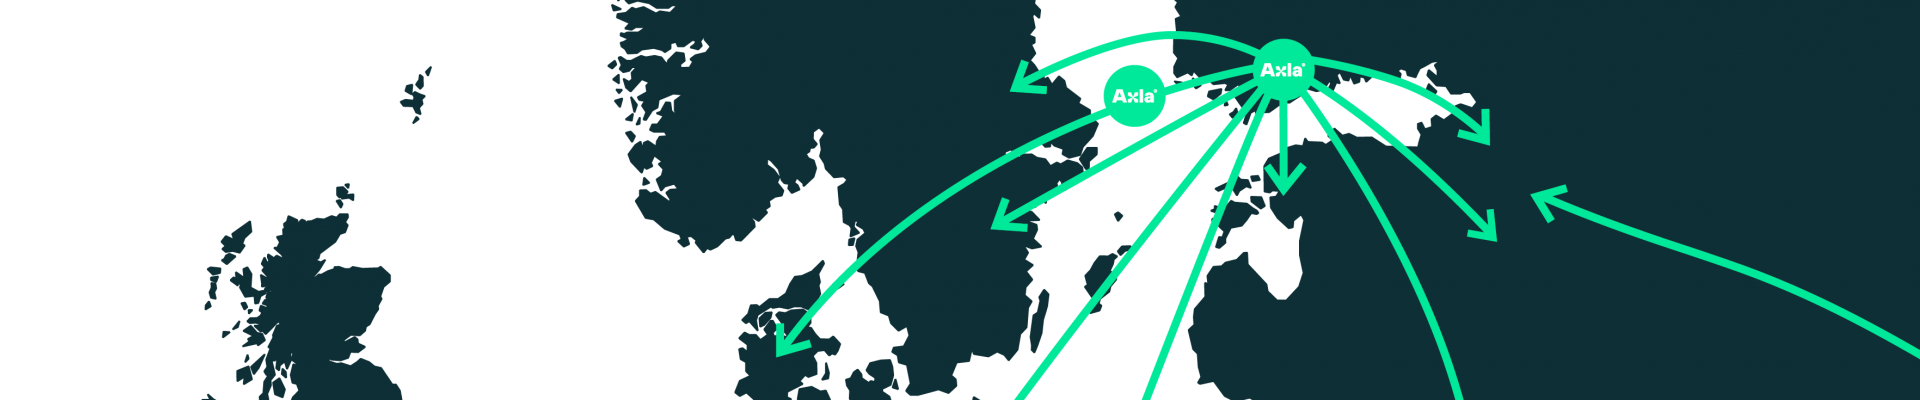 Axla Logistics global network